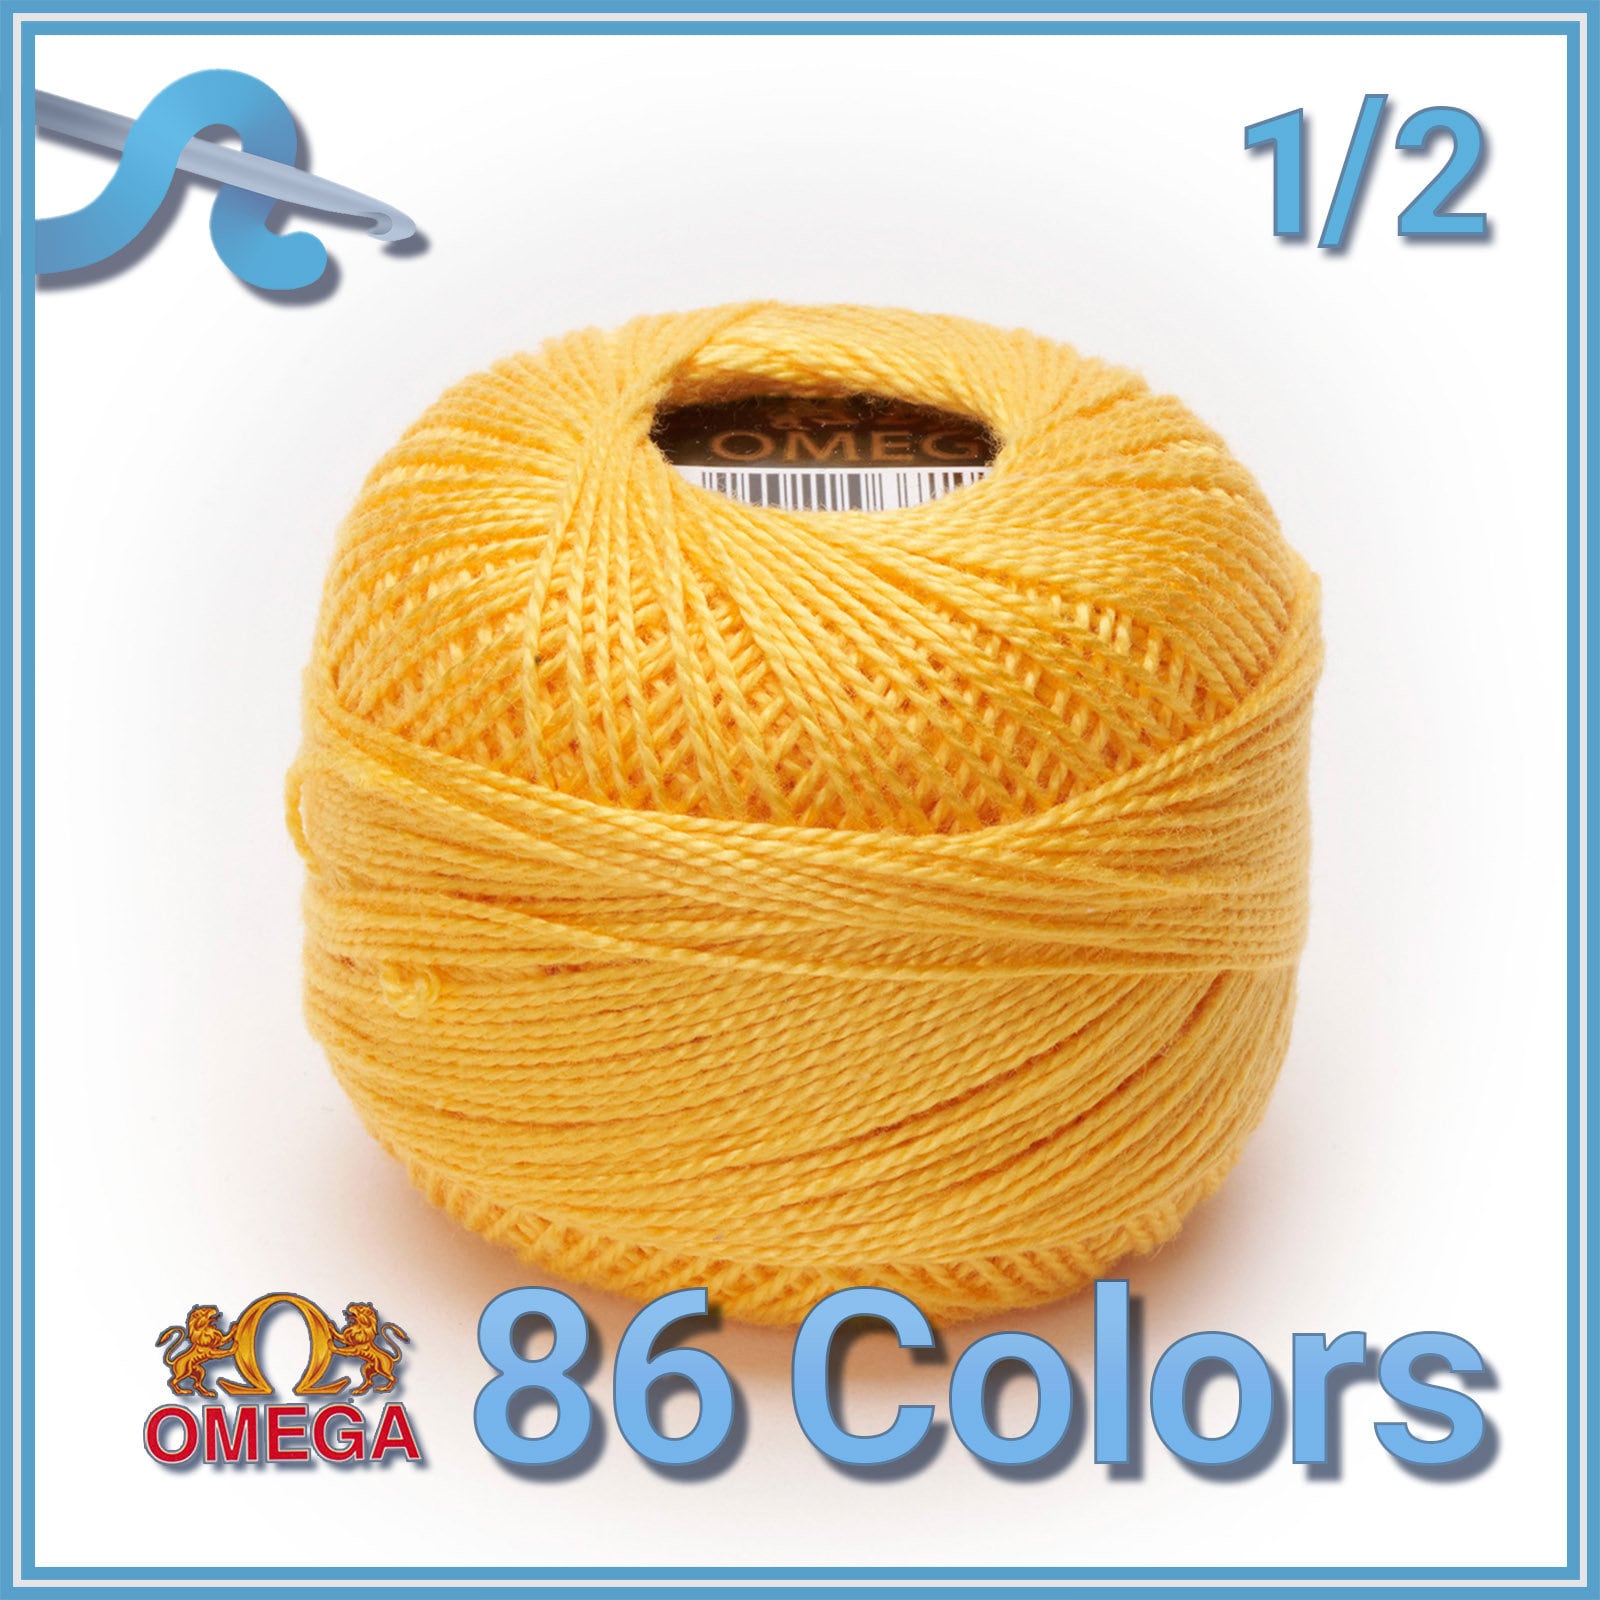 Sullivans Crochet Yarn 3ply, Harvest Gold- 50g Royal Rayon Yarn